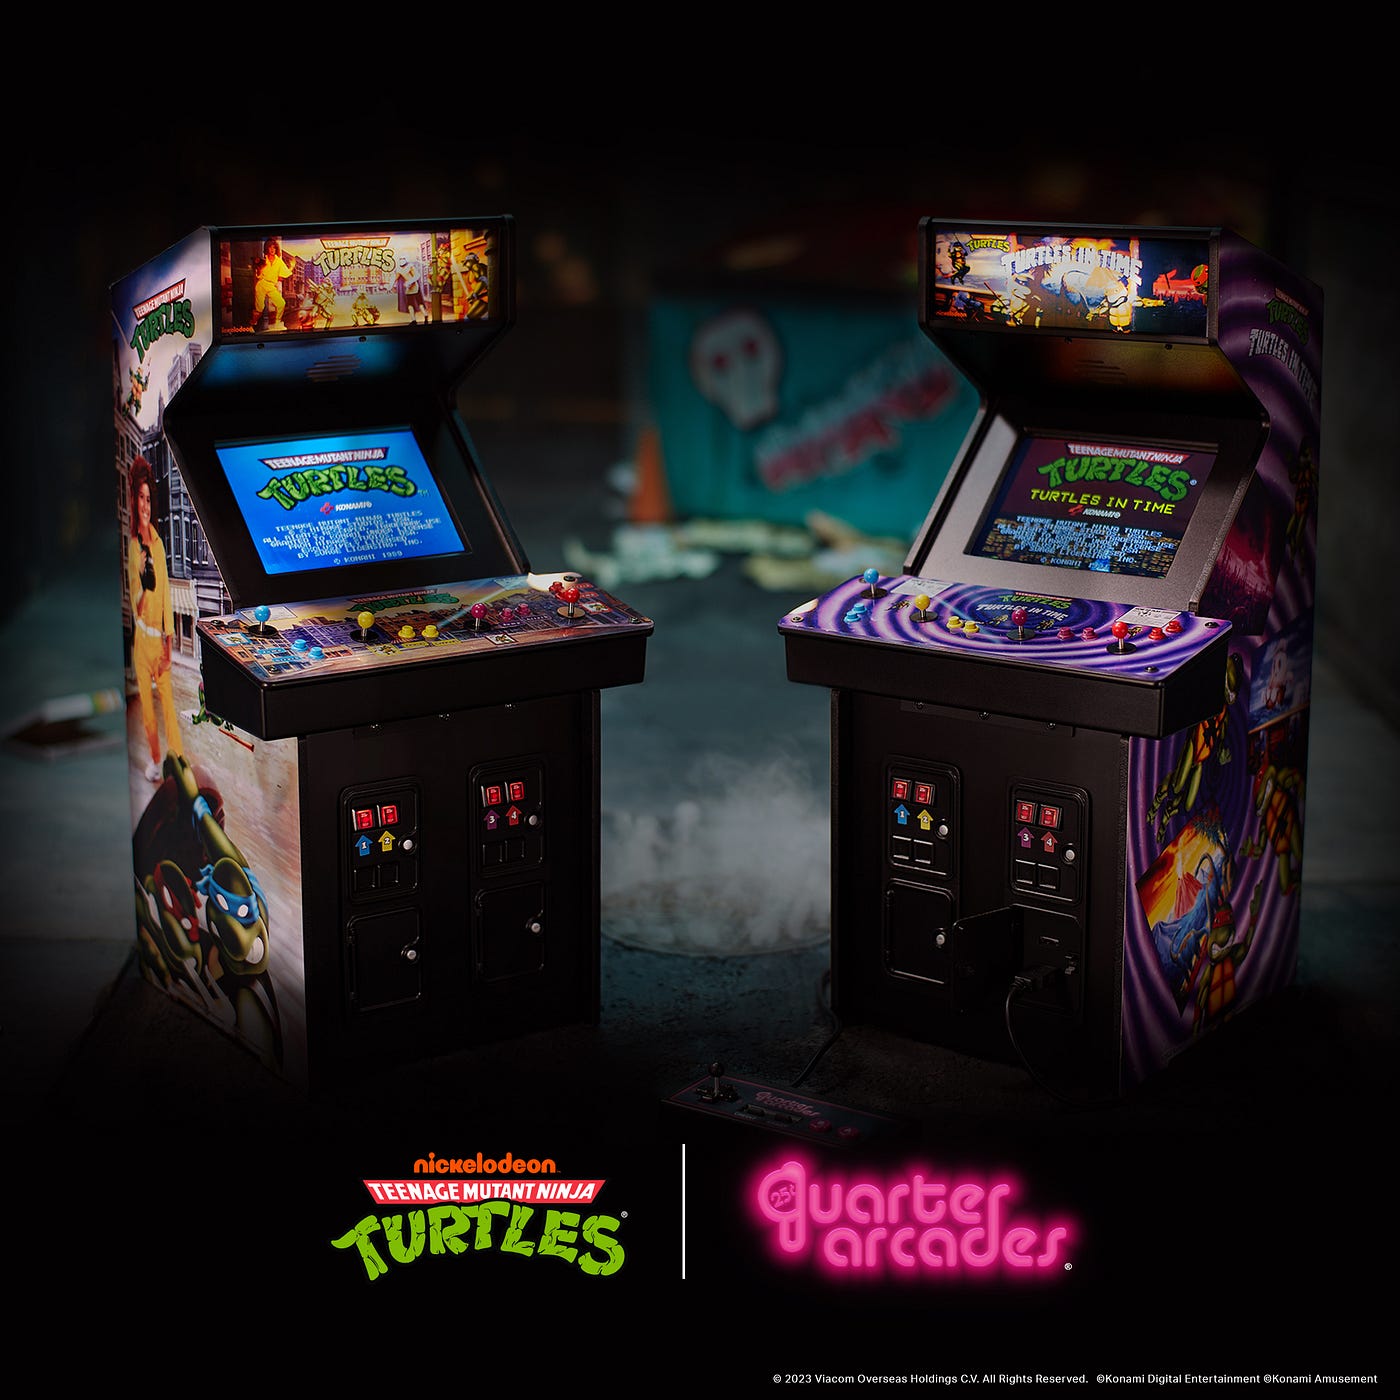 Teenage Mutant Ninja Turtles: Arcade Lunchbox with Thermos